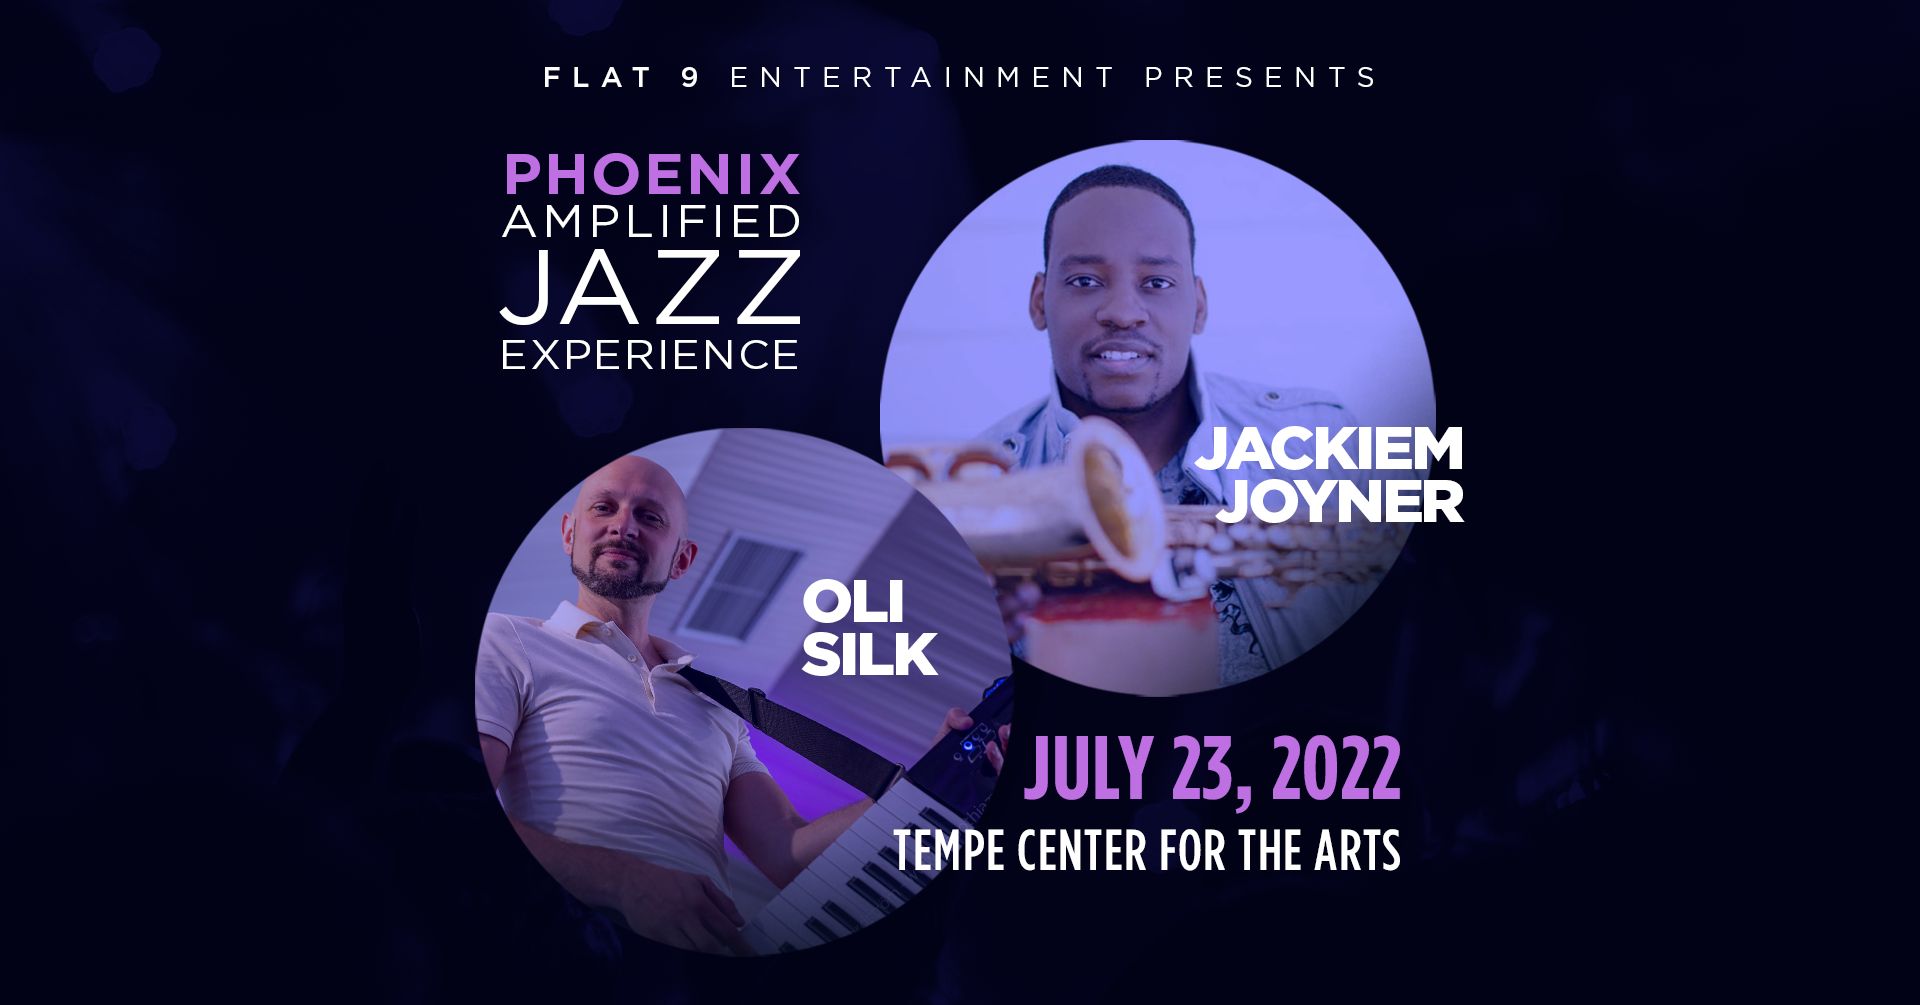 Phoenix Amplified Jazz Experience - Jackiem Joyner and Oli Silk, Tempe, Arizona, United States